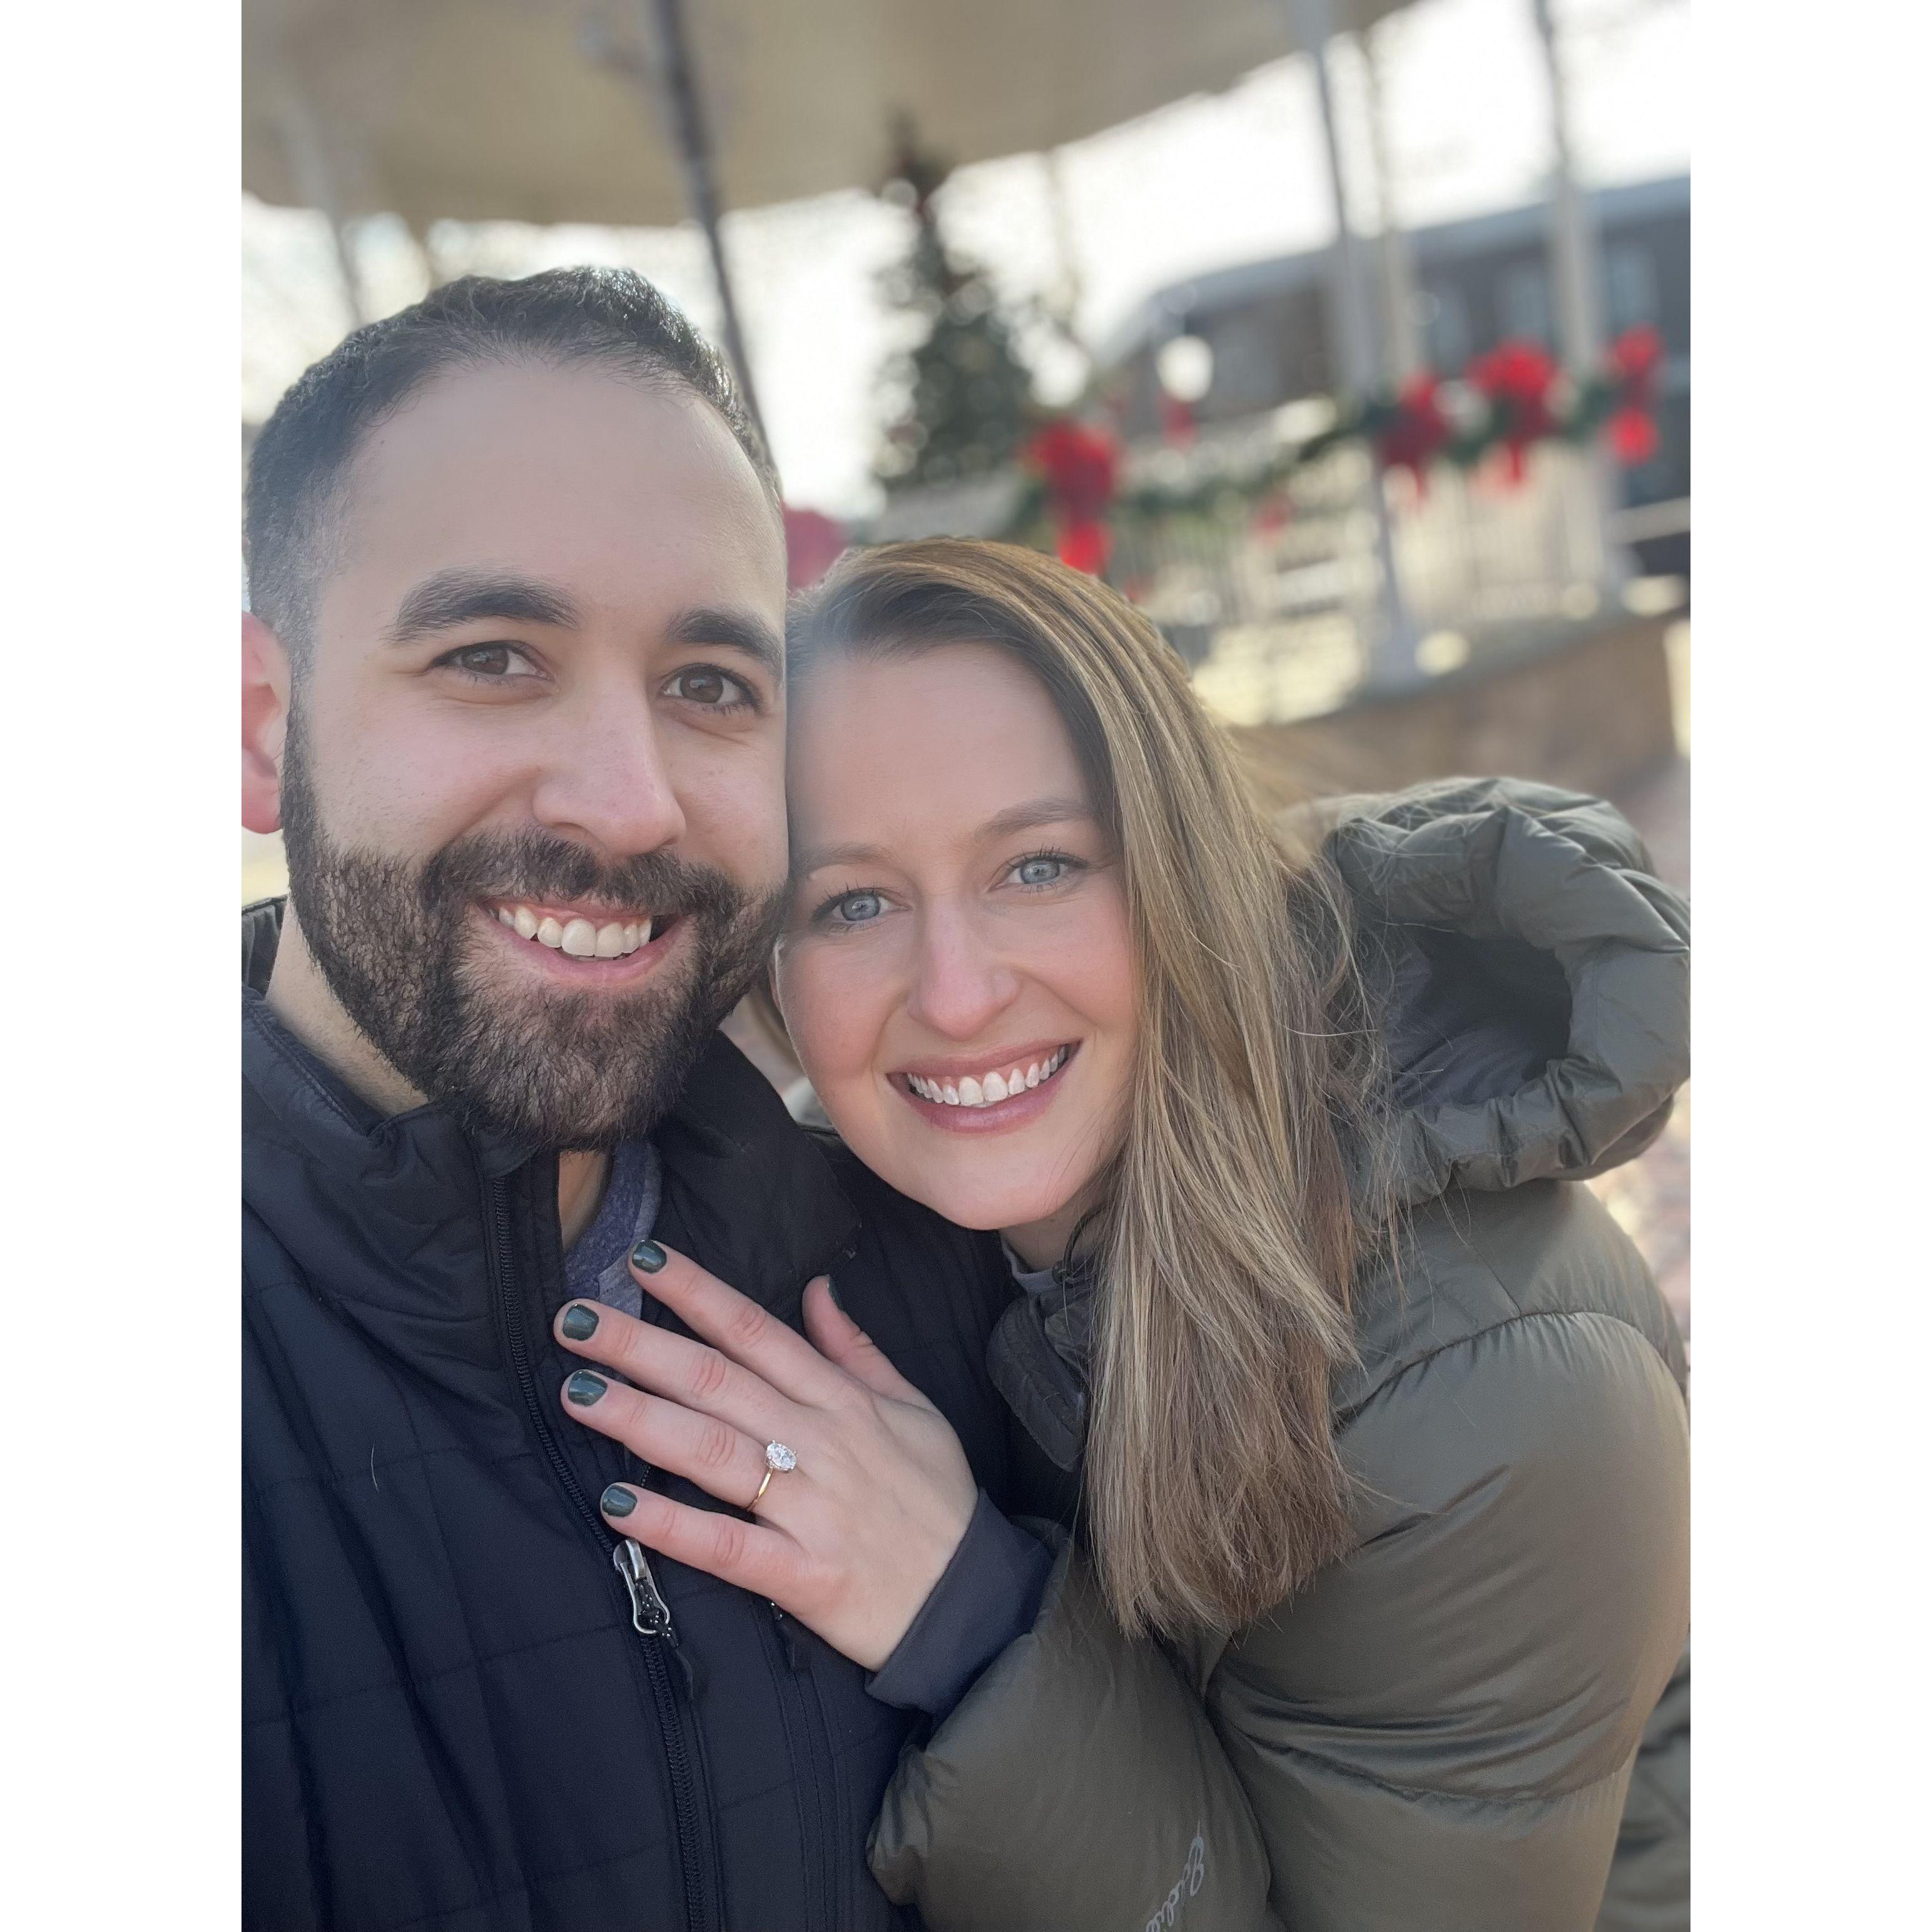 Engaged! Ligonier, PA in December of 2022